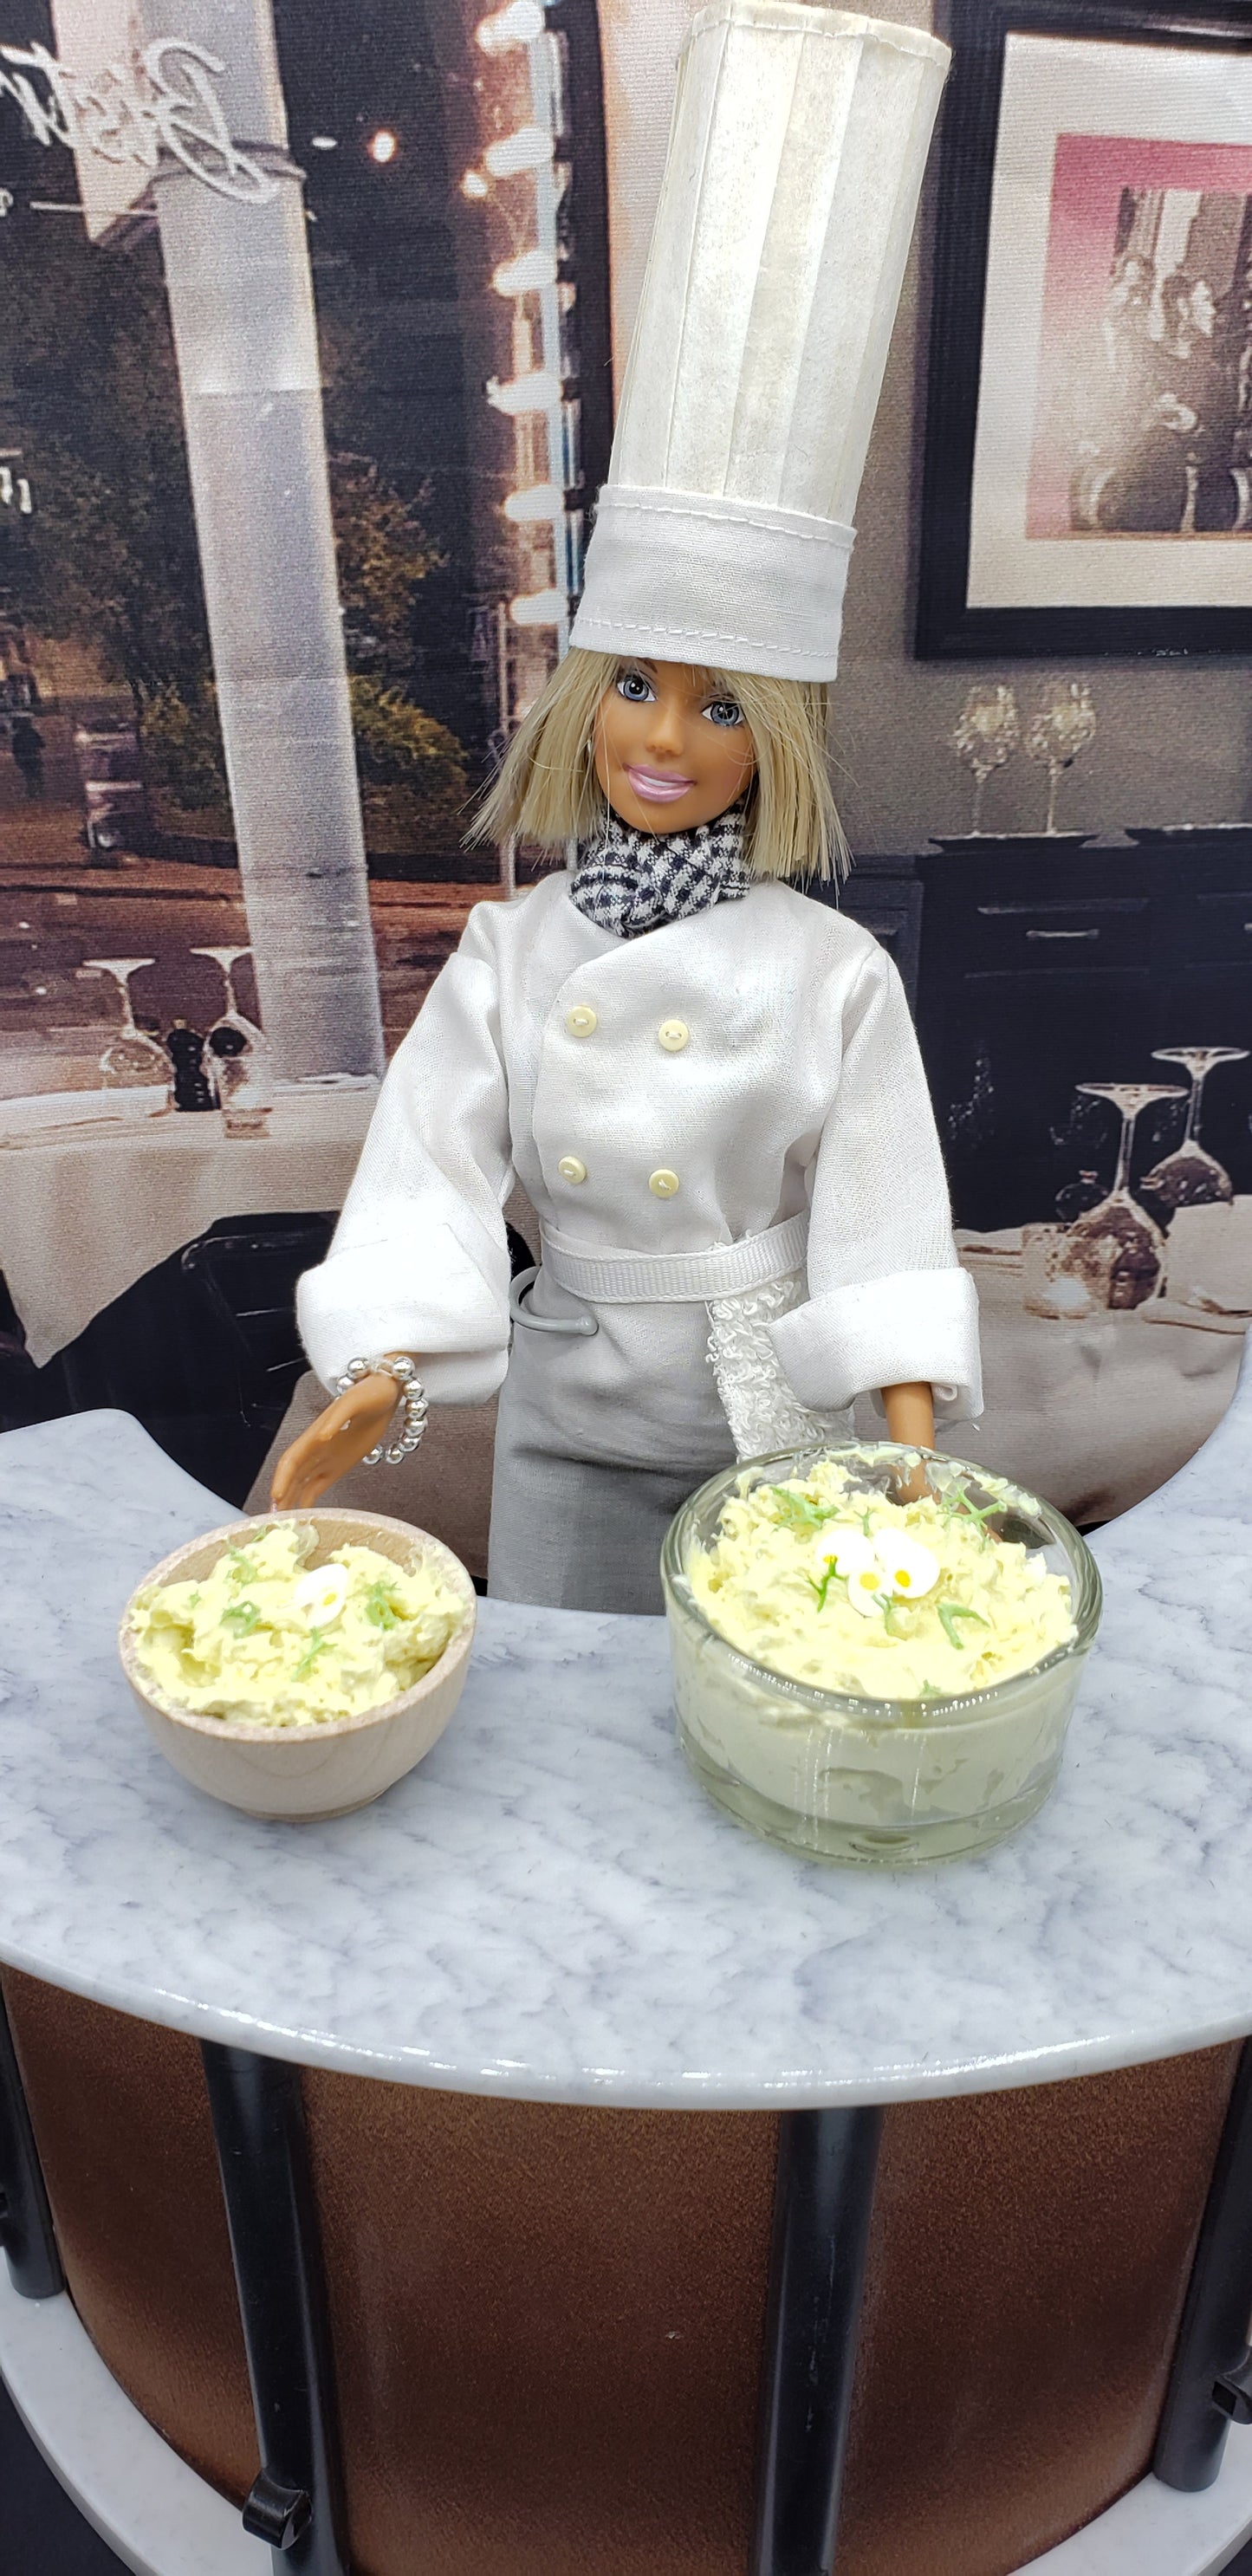 Barbie doll with potato salad